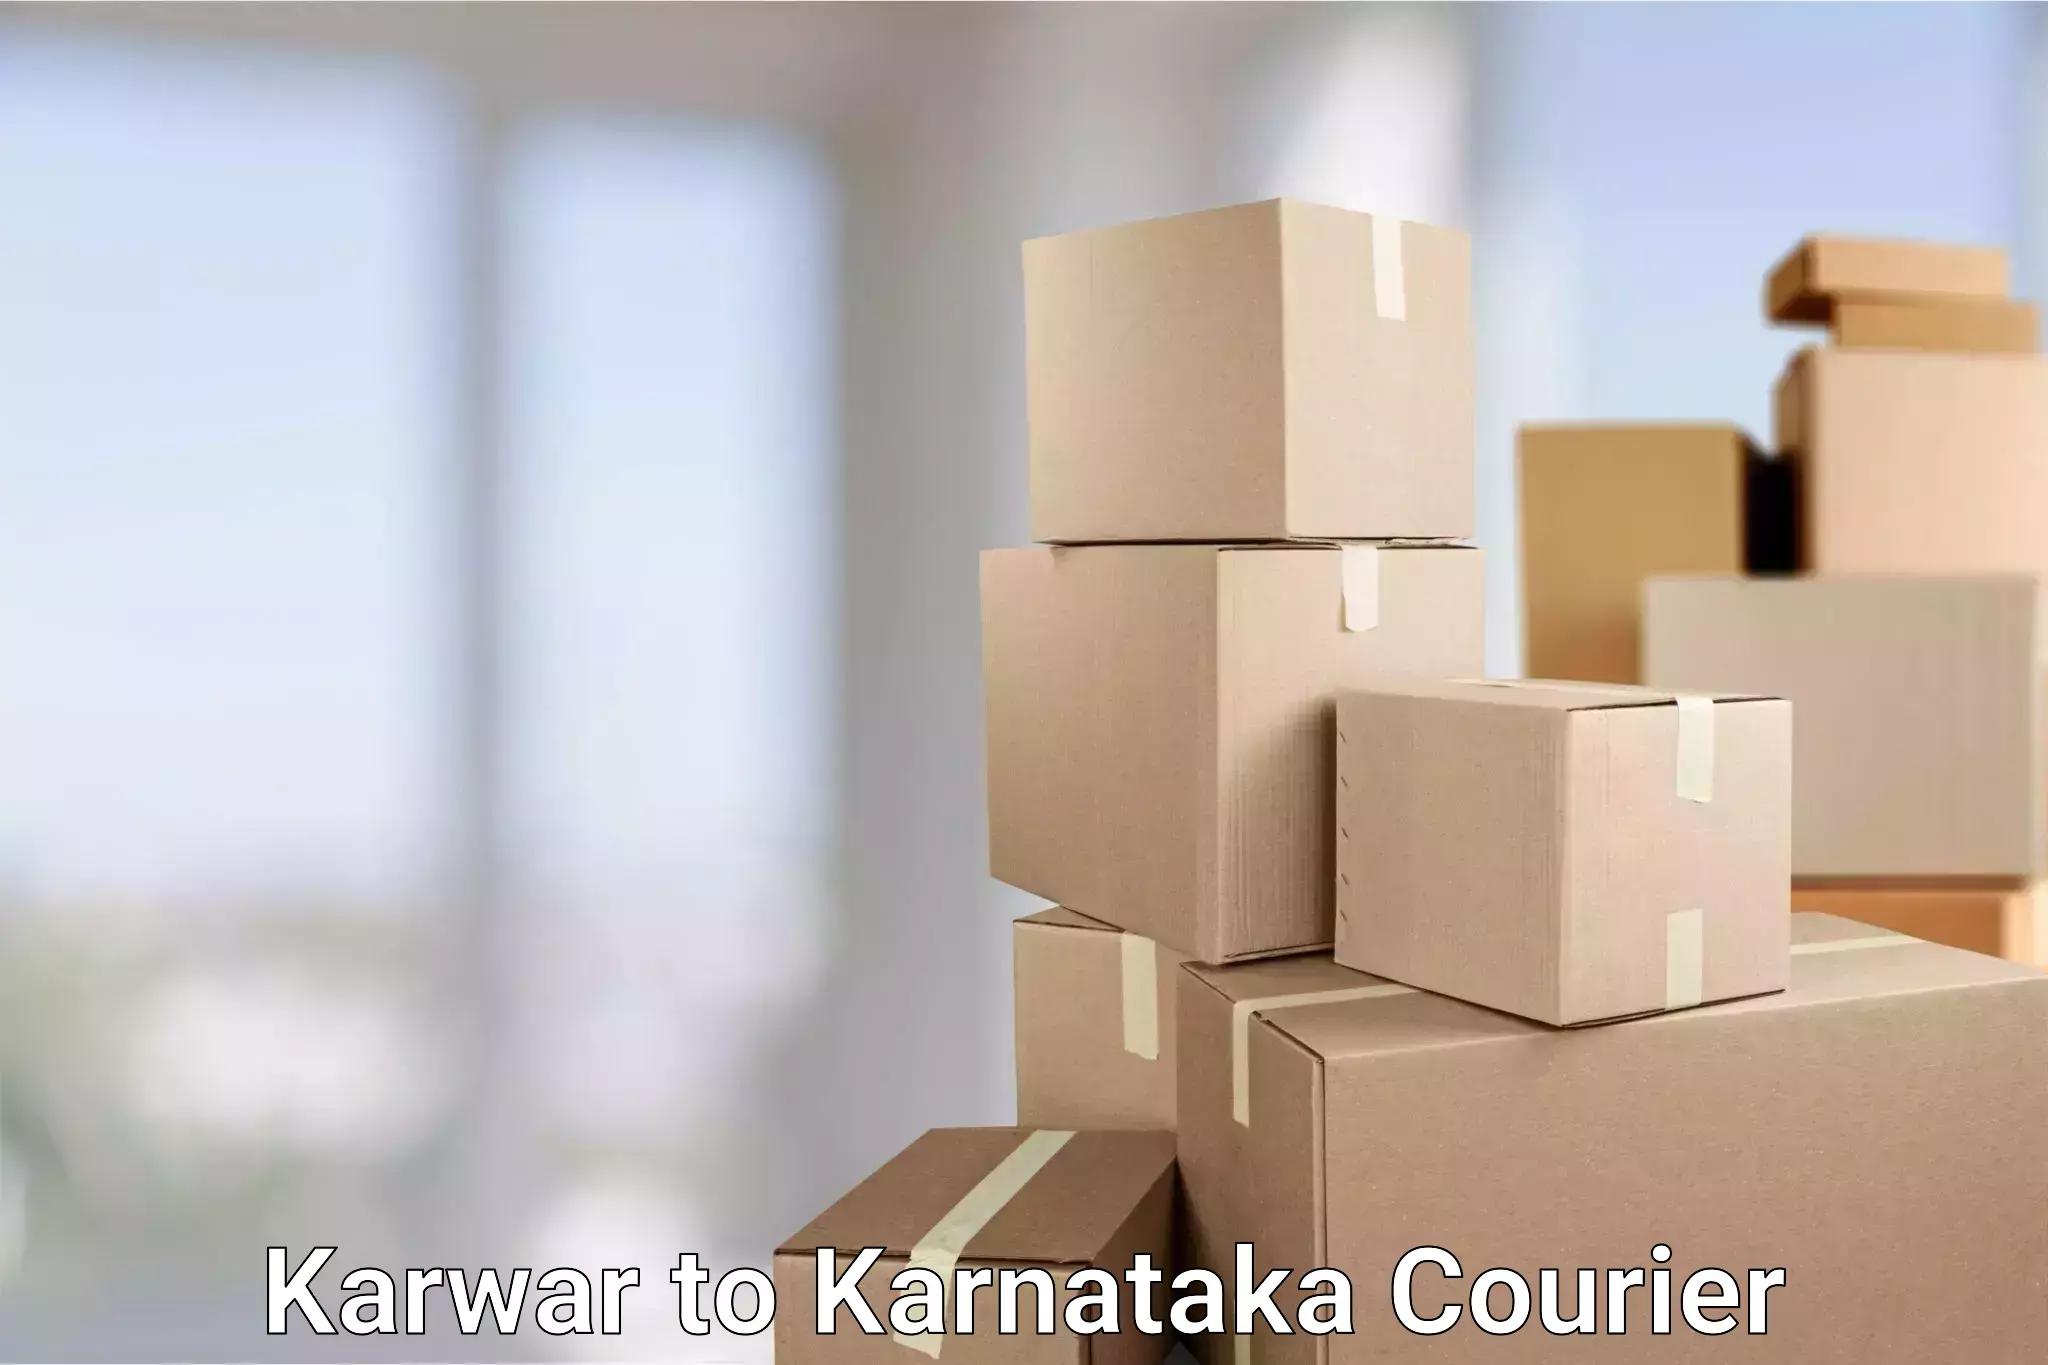 Global shipping networks Karwar to Karnataka